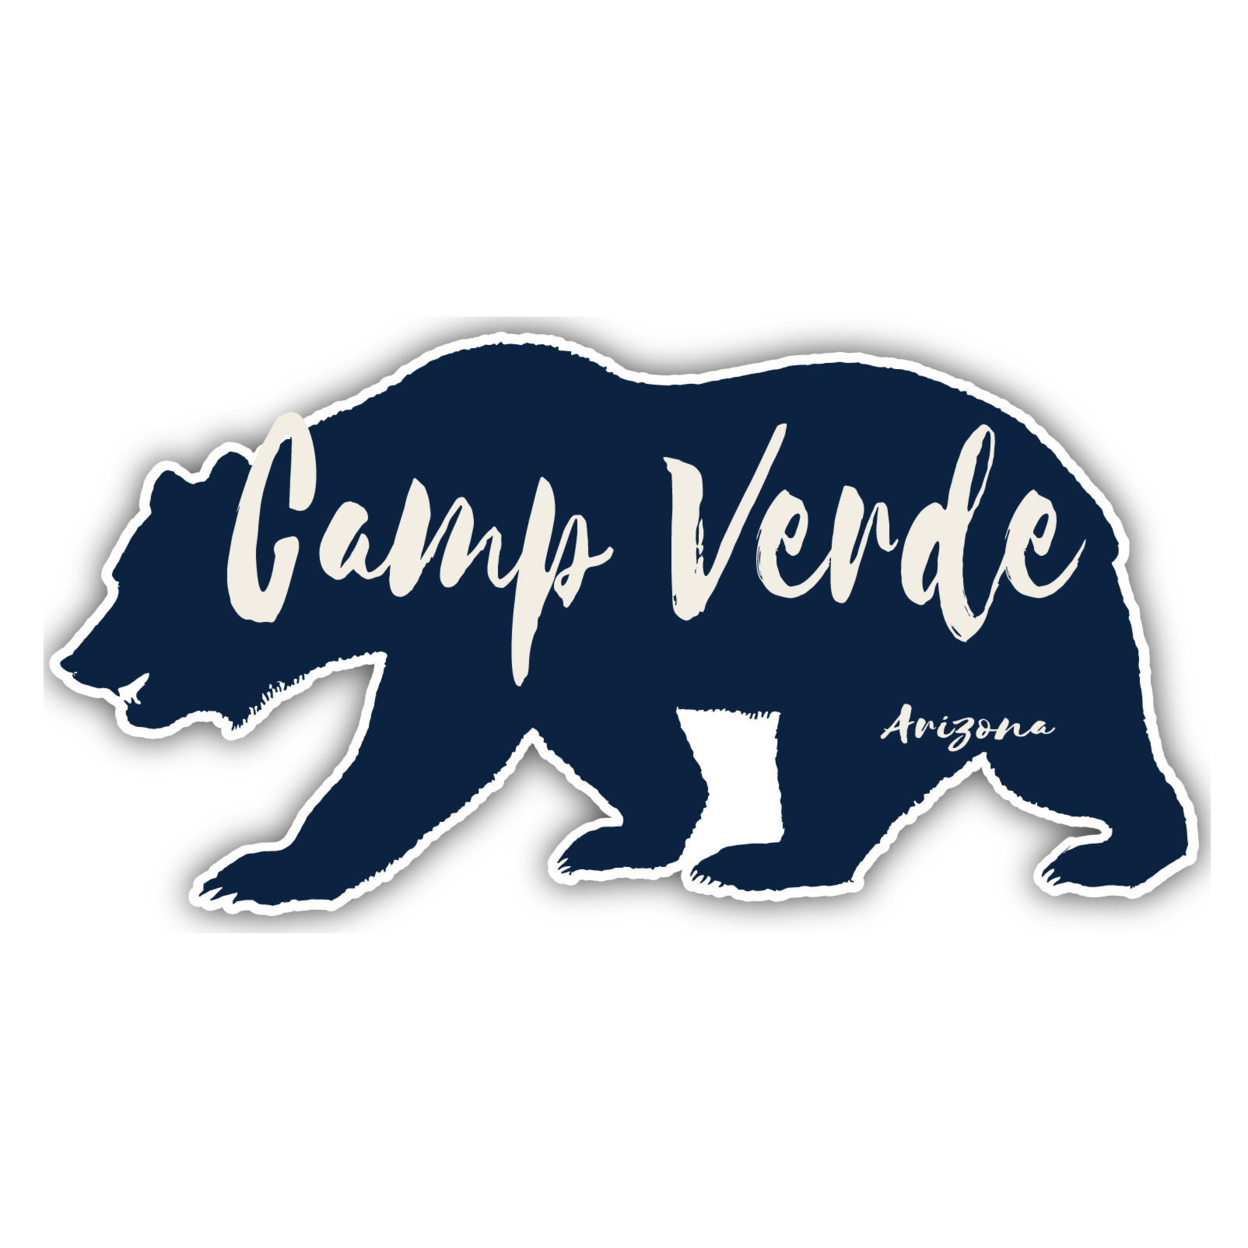 Camp Verde Arizona Souvenir Decorative Stickers (Choose Theme And Size) - 4-Pack, 2-Inch, Camp Life